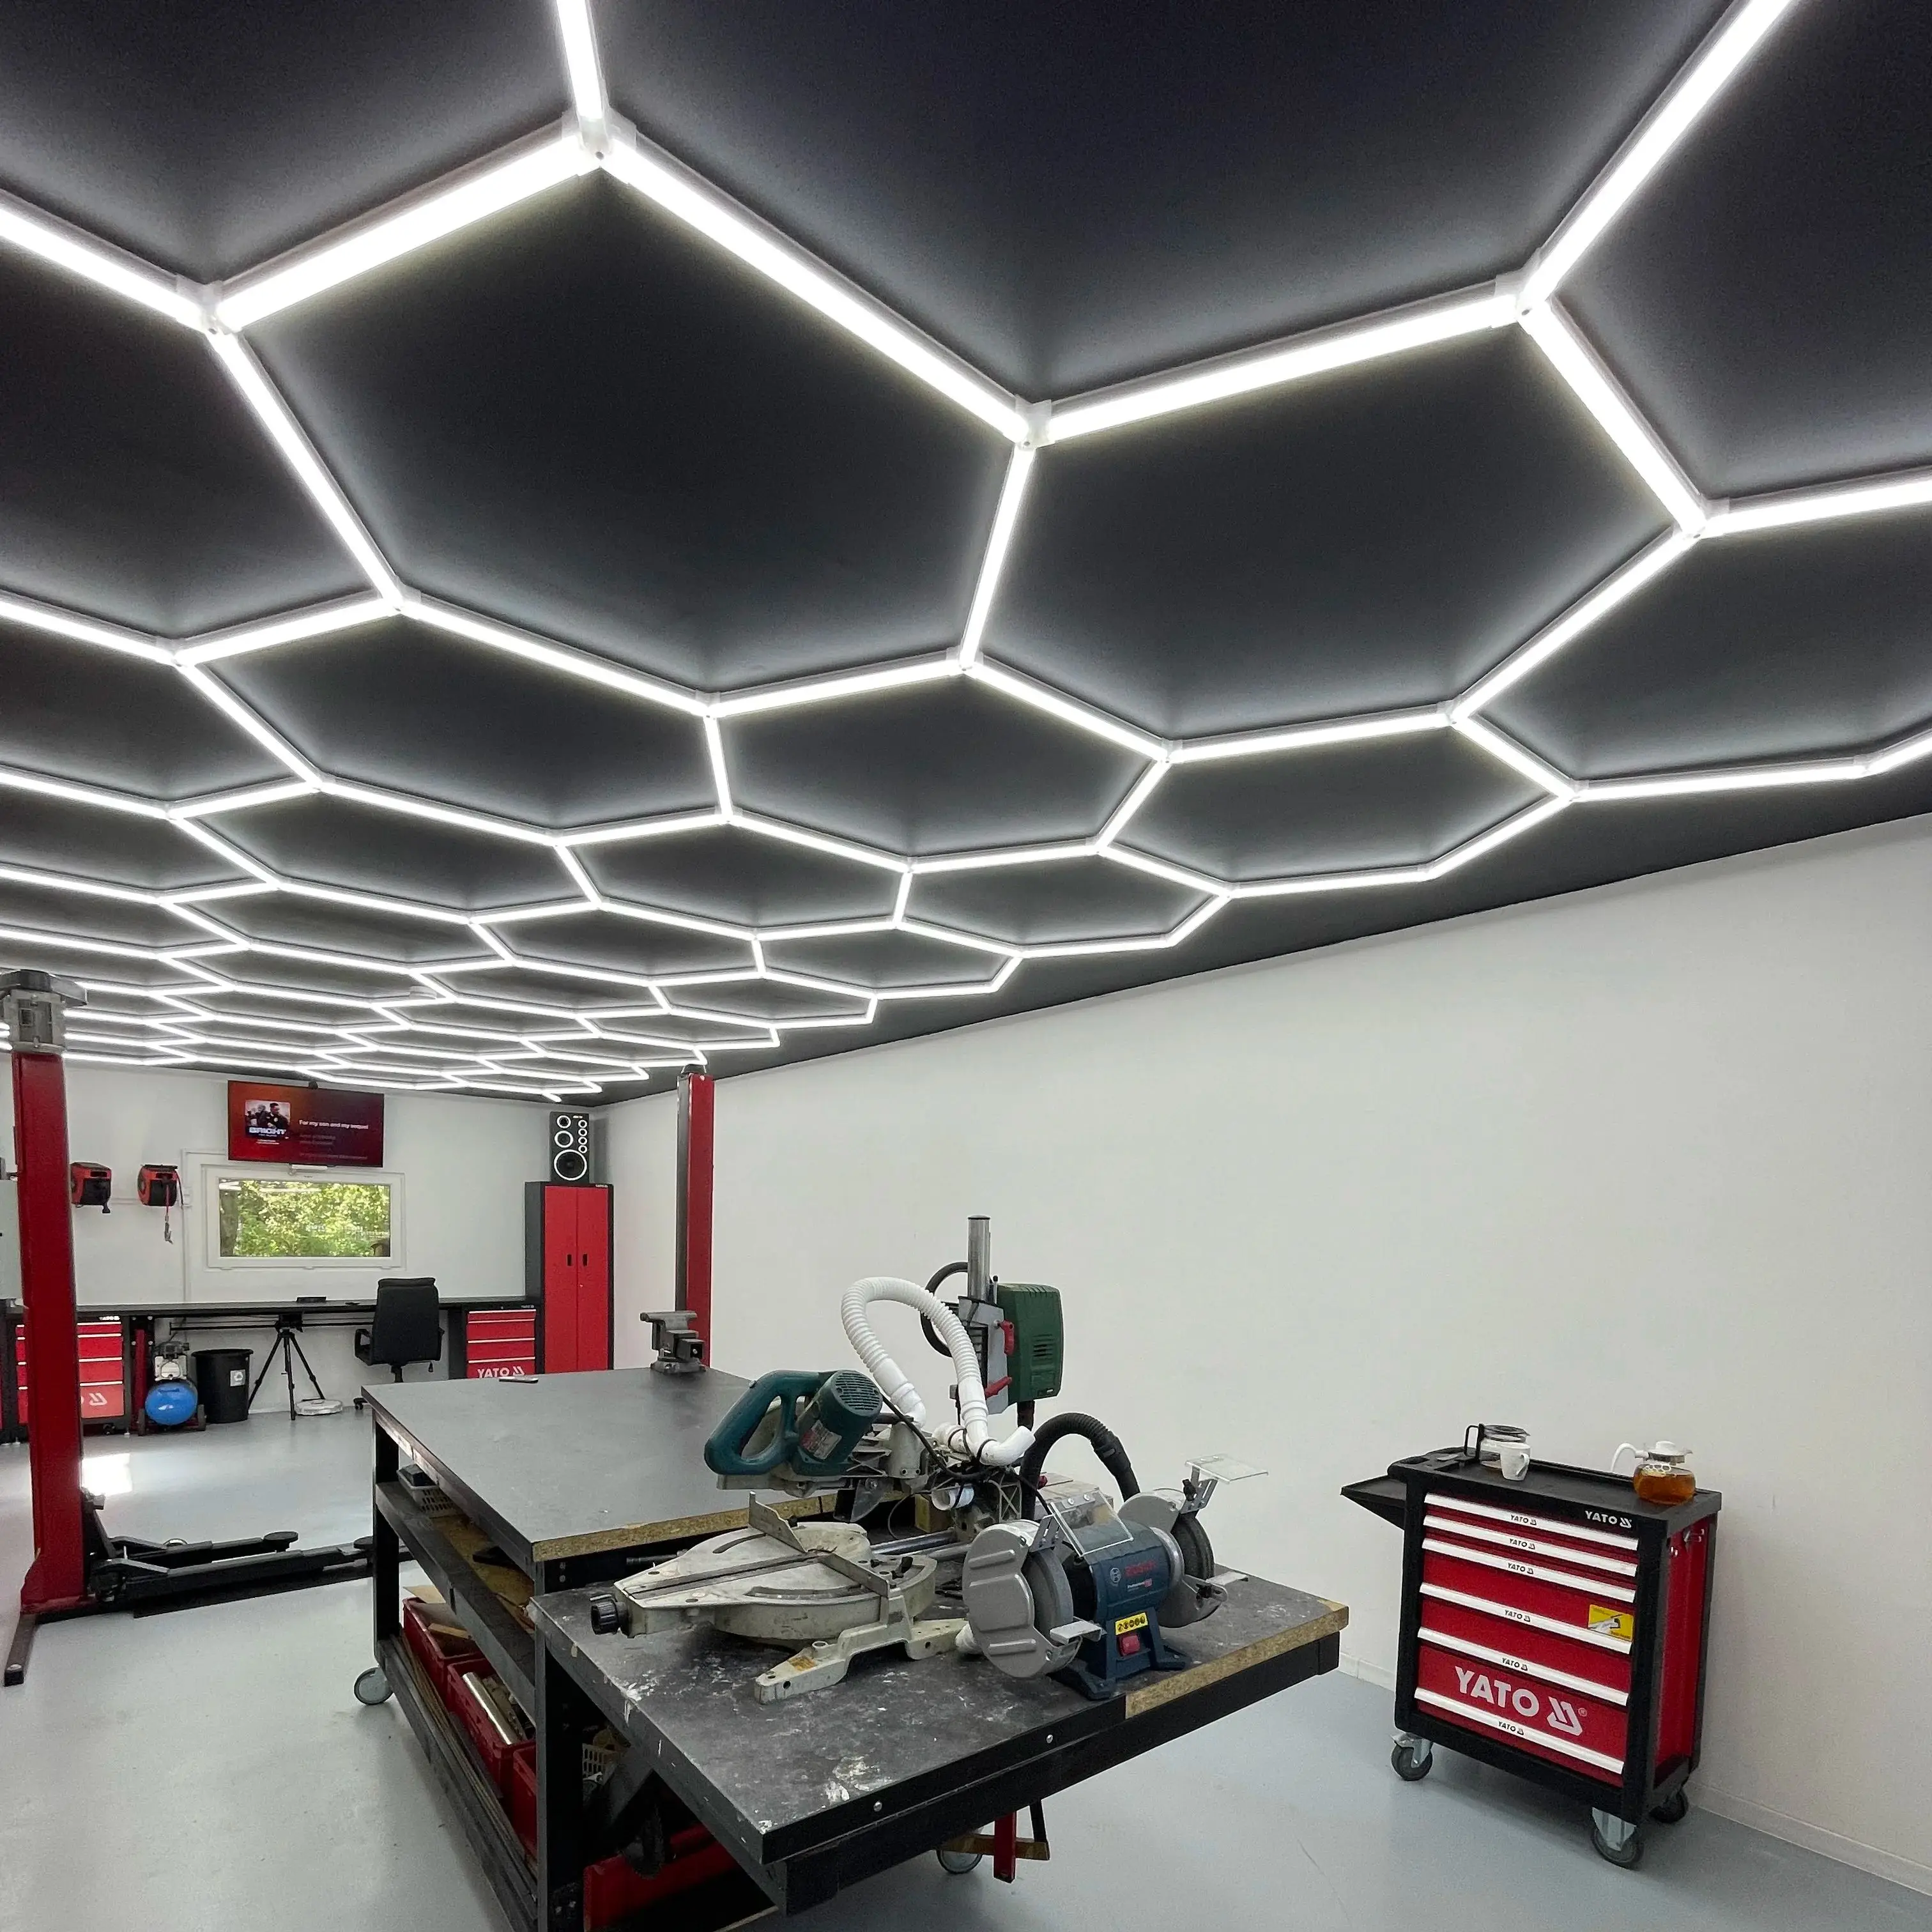 

4*15M Factory Super Bright Grid Hexagon Lighting for Auto Showroom Led Light Detailing Workshop Lamp